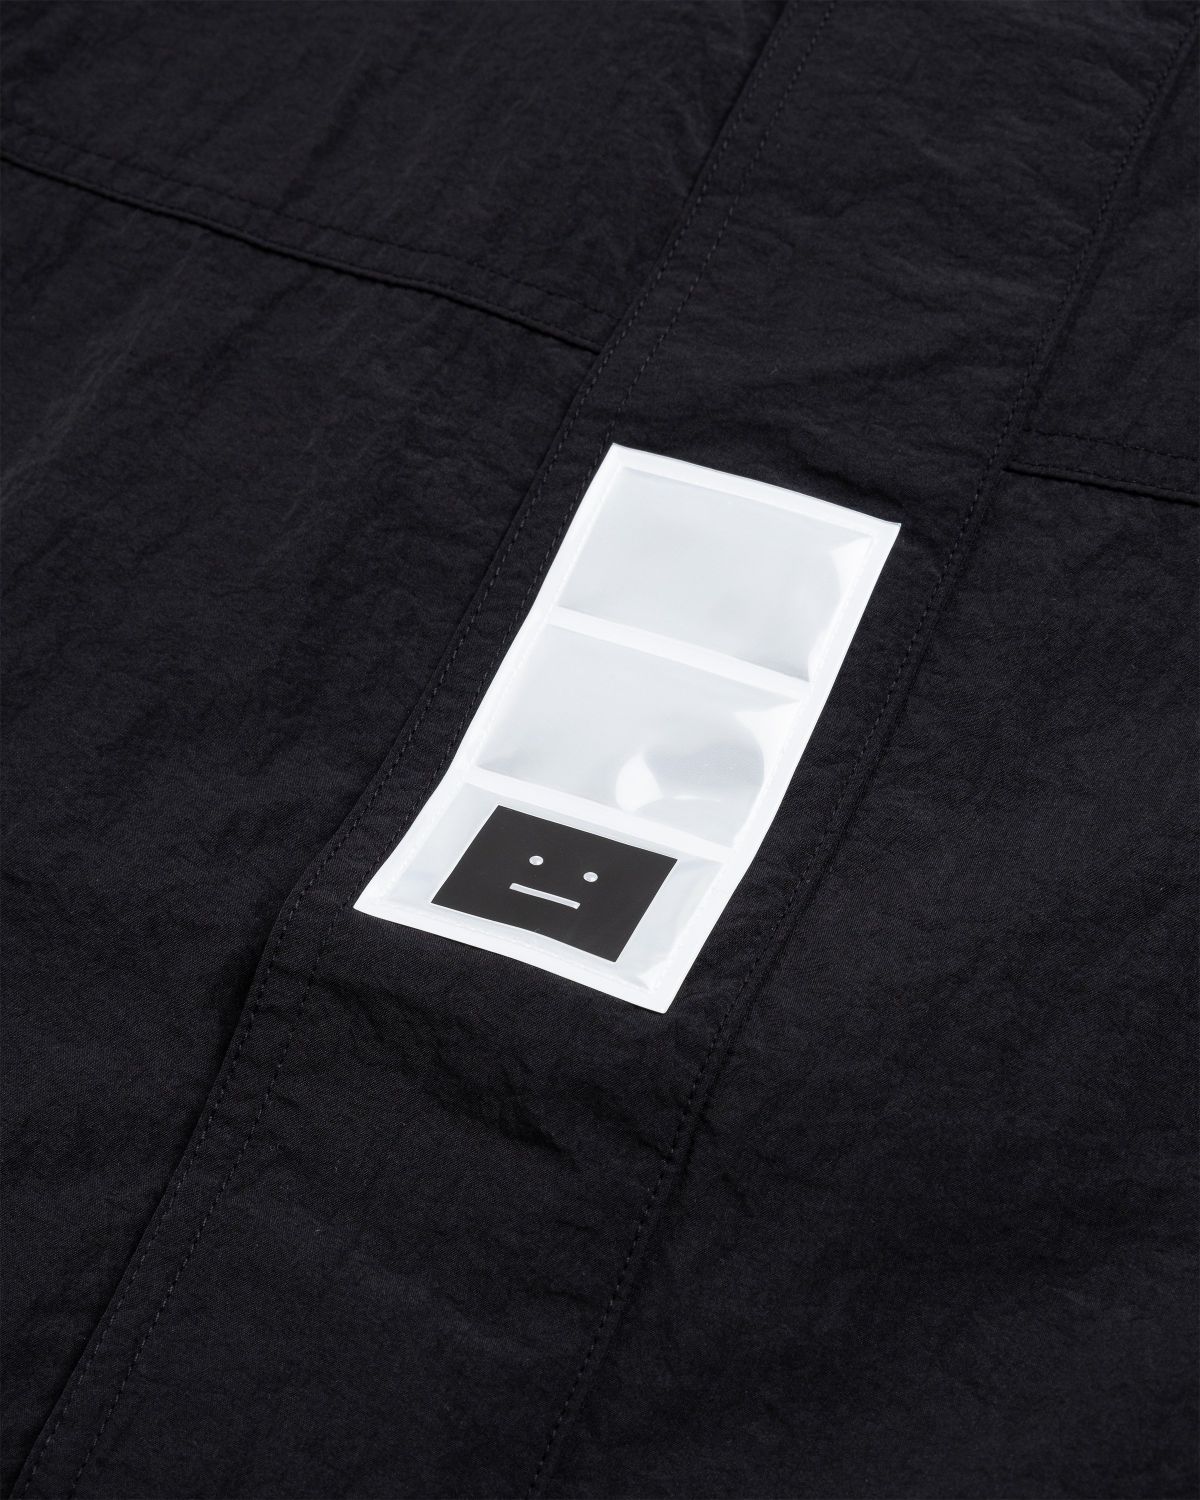 Acne Studios – Nylon Hooded Jacket Black